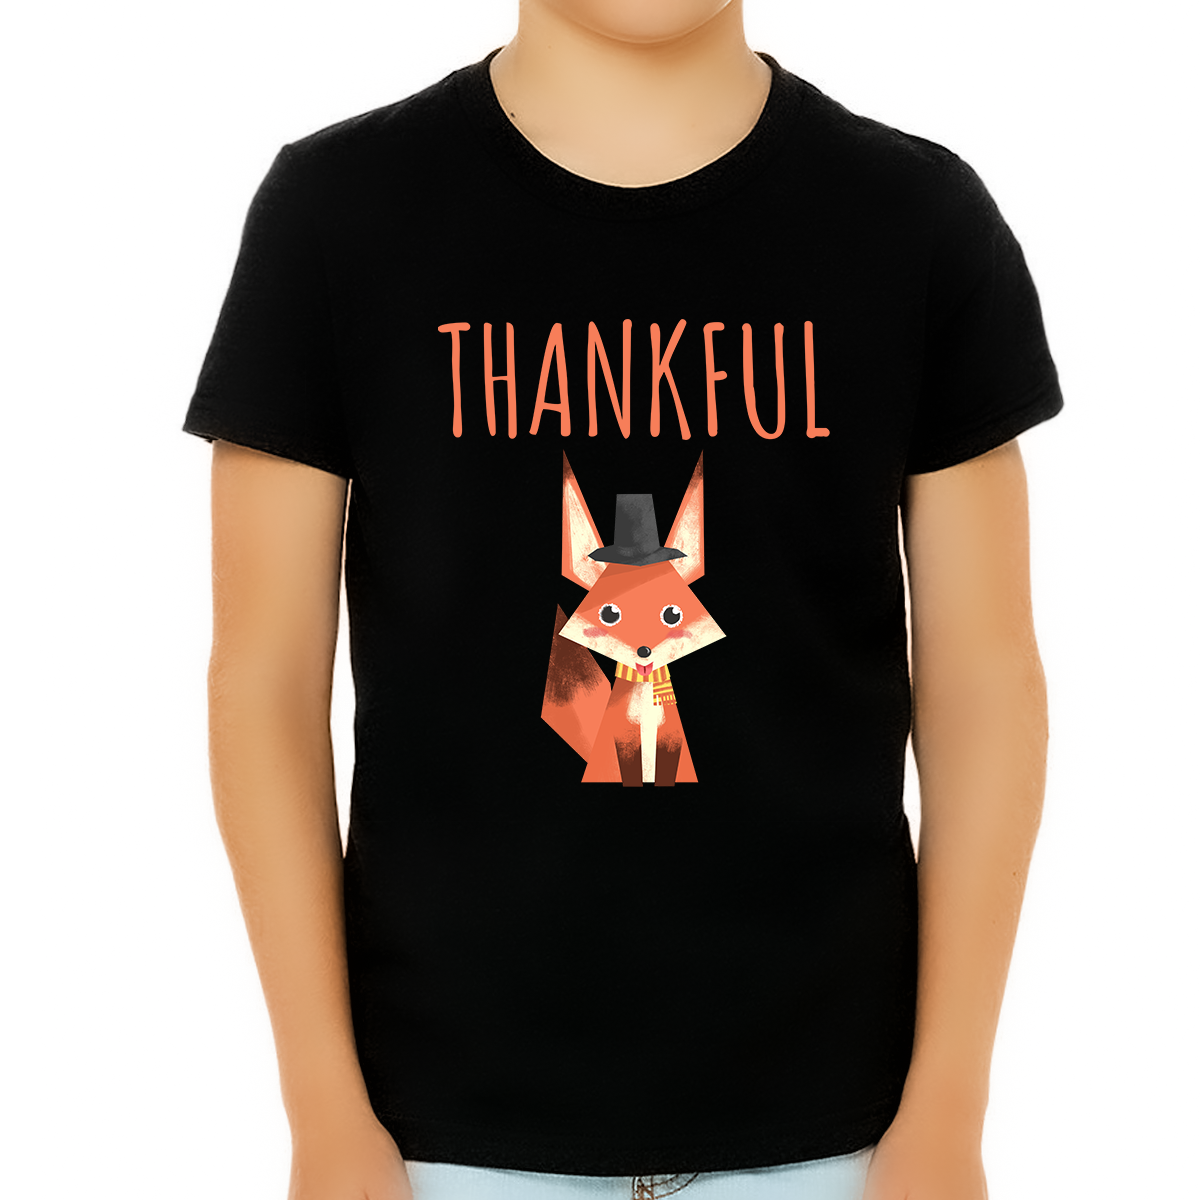 Funny Thanksgiving Shirts for Boys Thanksgiving Shirts for Kids Cute Fall Shirts for Kids Cute Fox Shirt